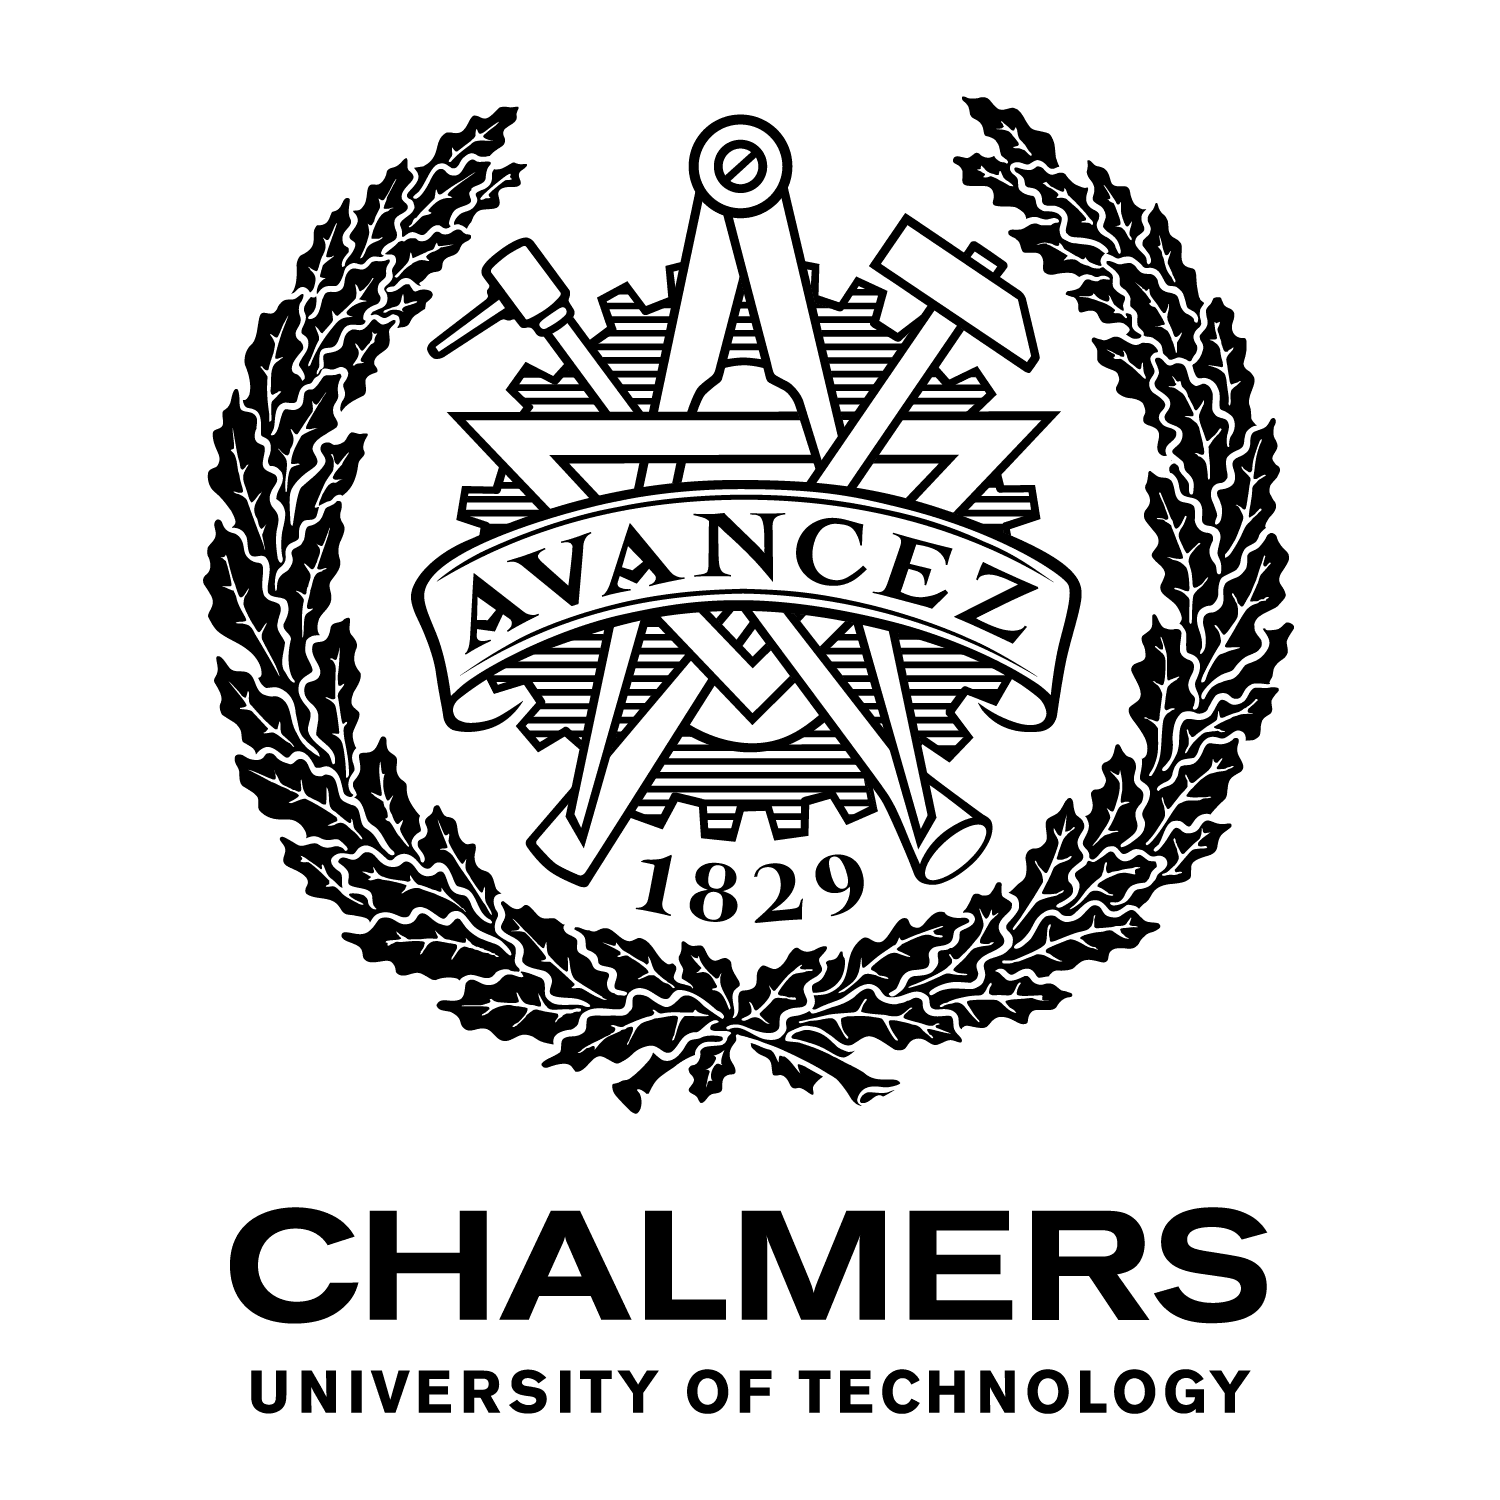 chalmers-university-of-technology-logo-freelogovectors.net_